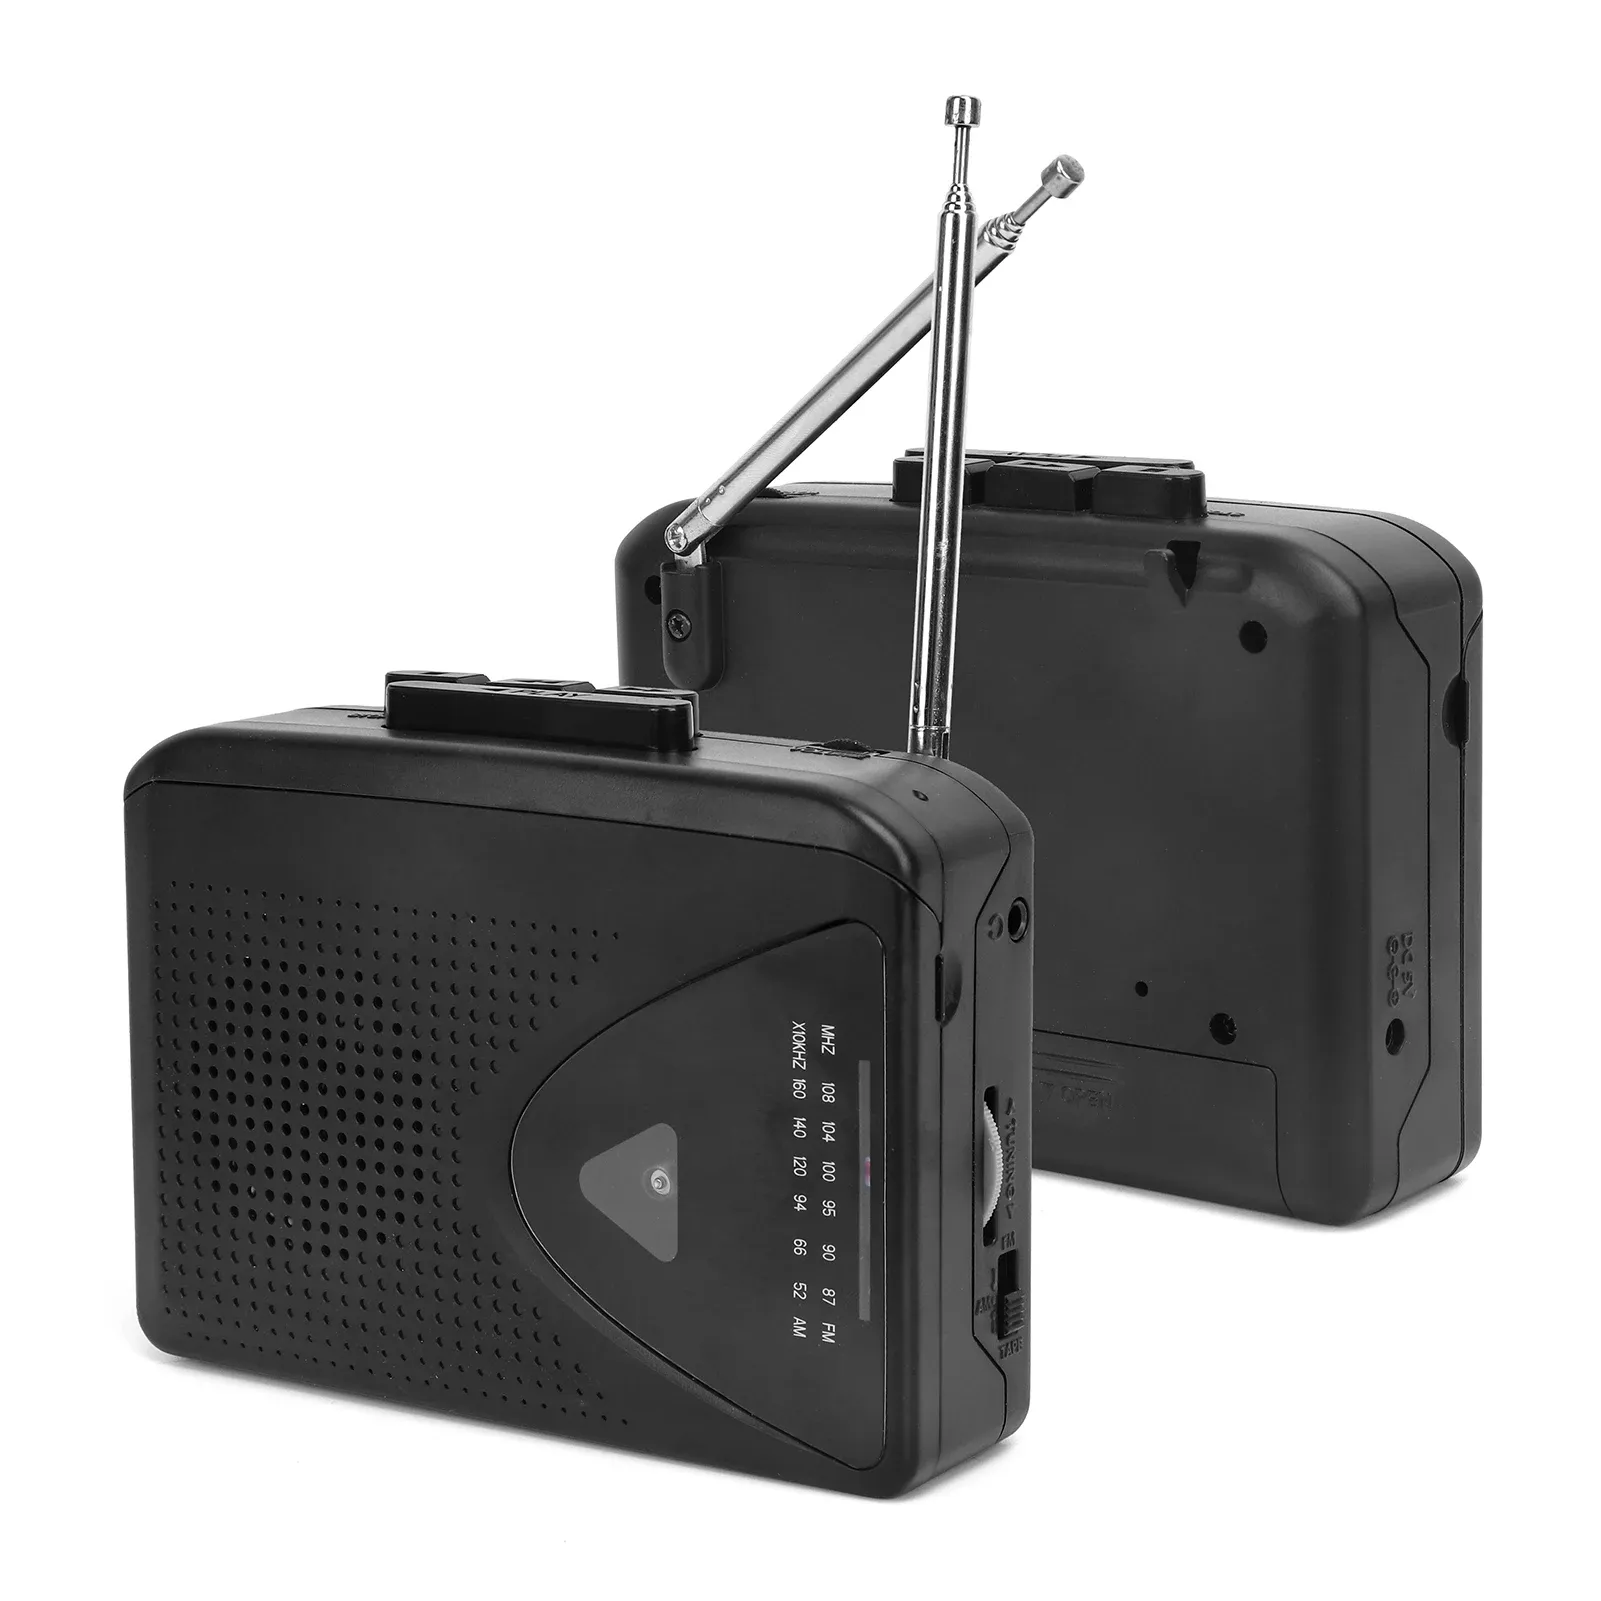 Spieler tragbarer Kassette Tape Player gebautes Lautsprecher Personal Walkman AM/FM Radio mit 3,5 mm EeaDphone Jack Stereo Tape Music Player